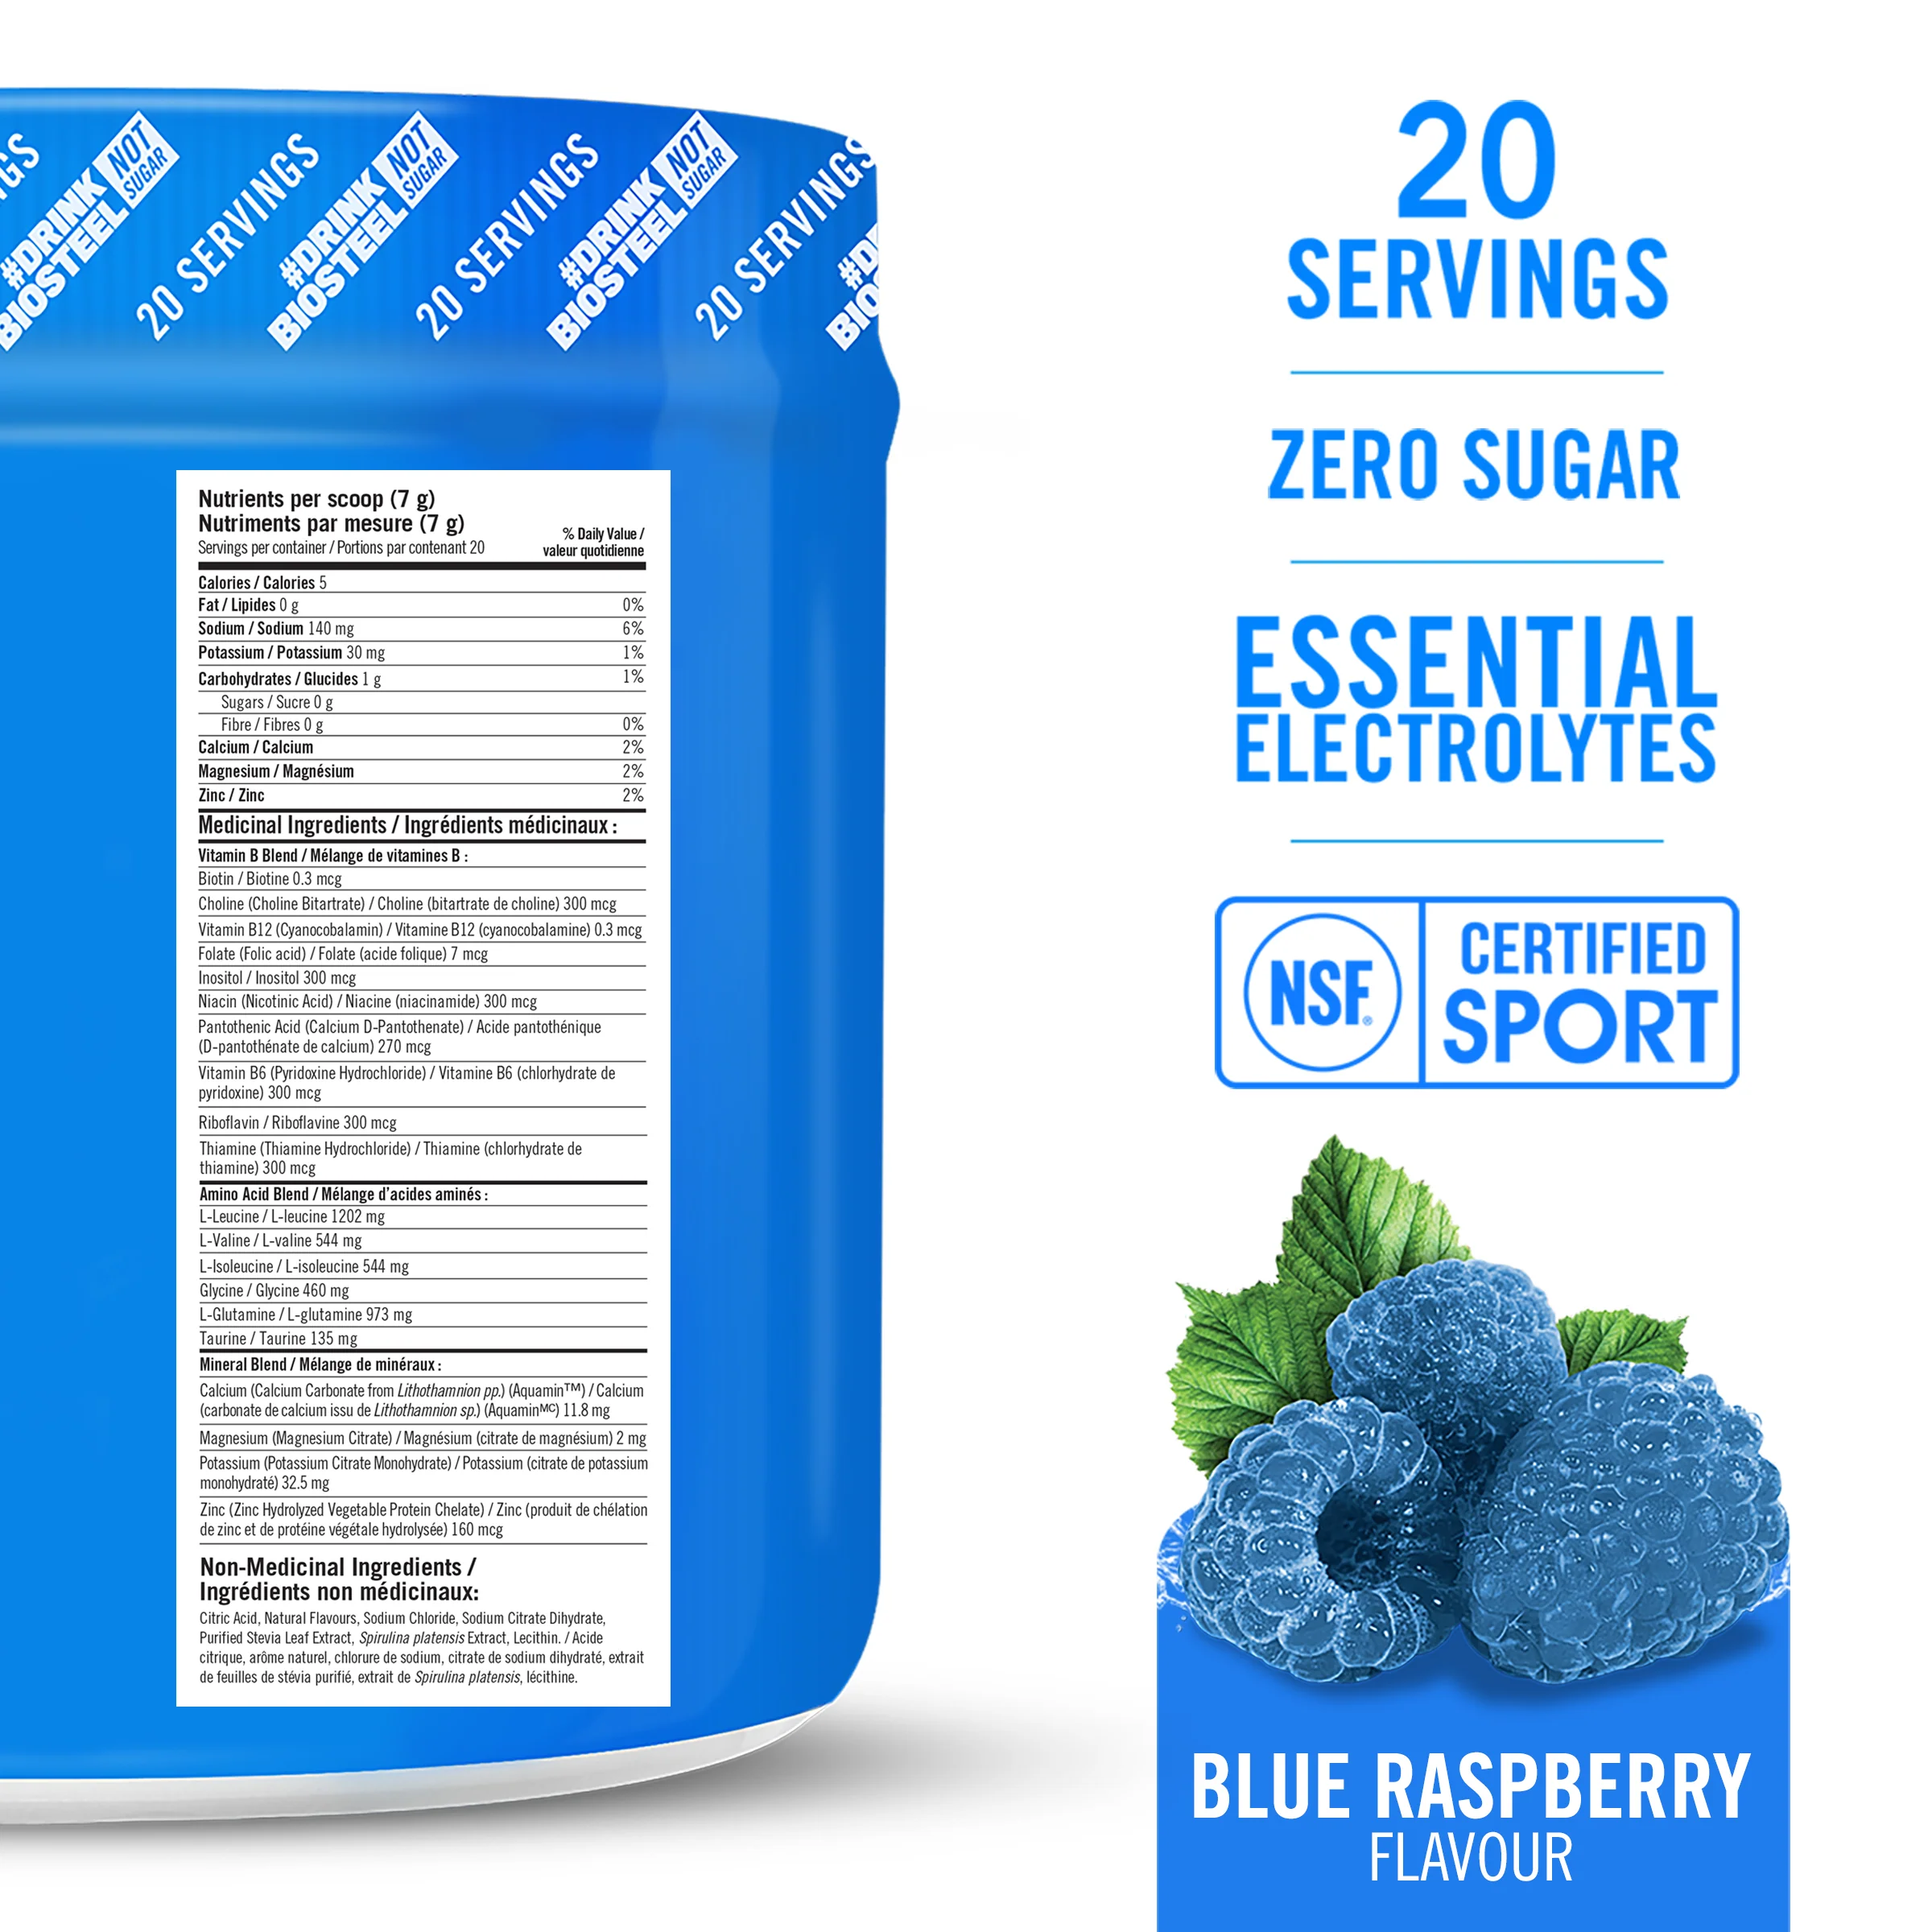 BioSteel Hydration Mix (20 servings) biosteel-hydration-mix-20-srvings Electrolytes White Freeze,Peach Mango,Mixed Berry,Blue Raspberry Biosteel